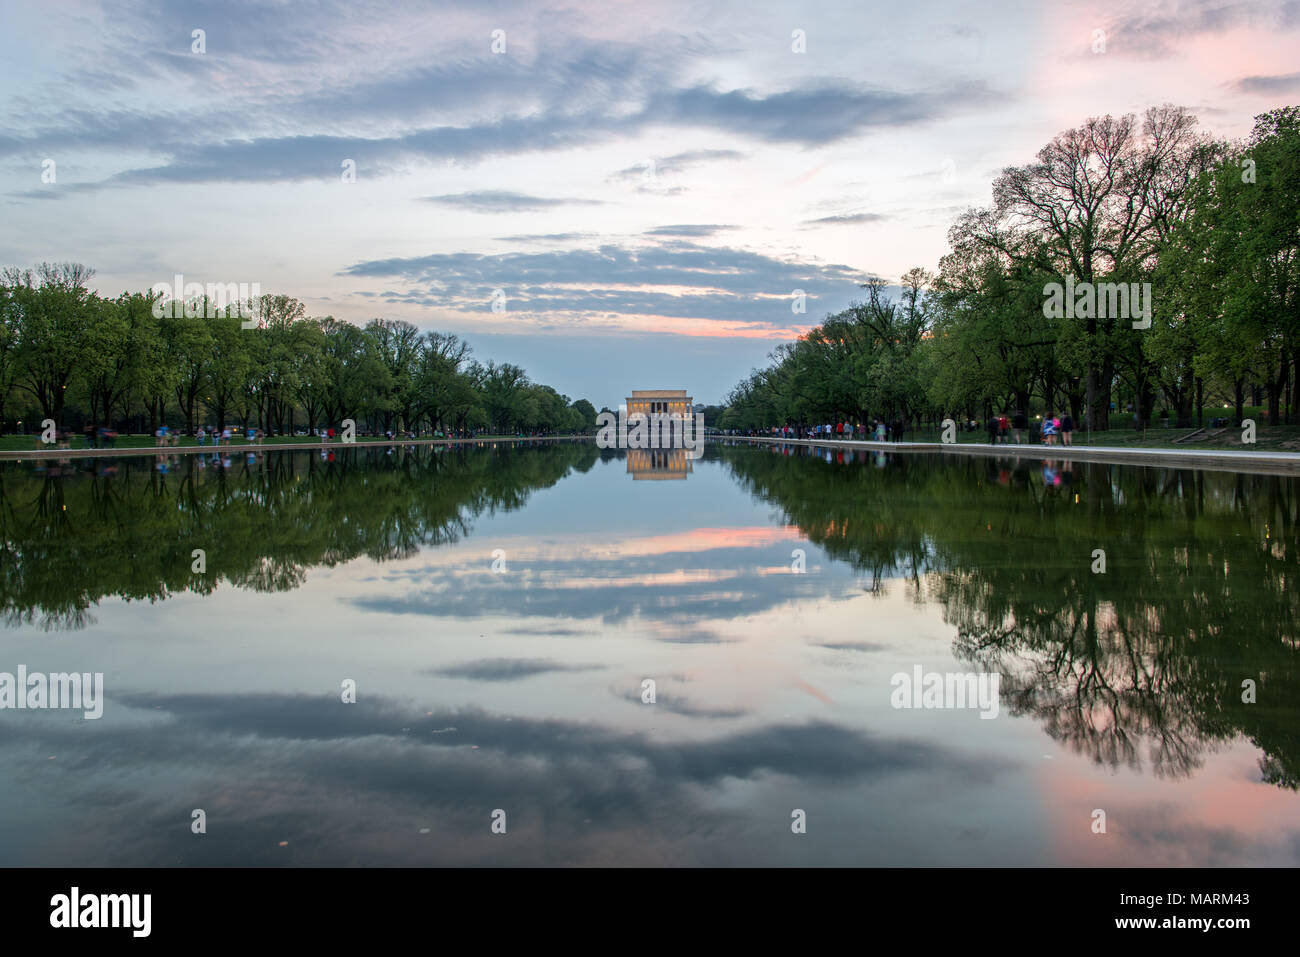 Lincoln Memorial Washington DC Foto Stock